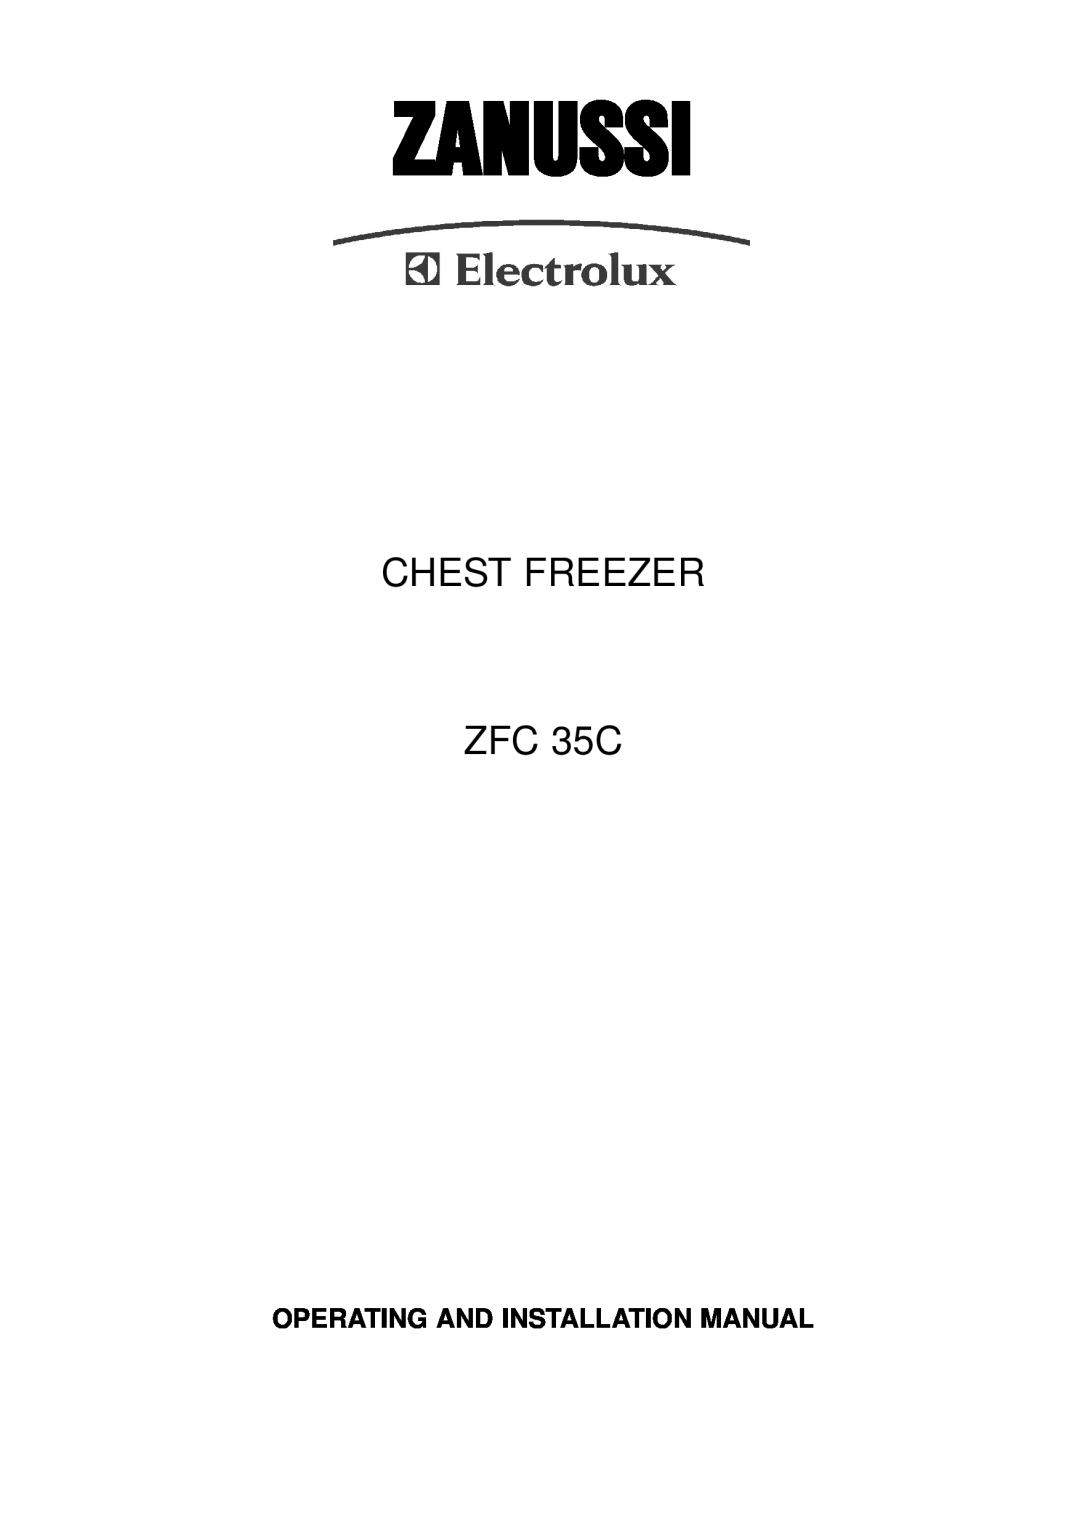 Zanussi installation manual Zanussi, CHEST FREEZER ZFC 35C, Operating And Installation Manual 